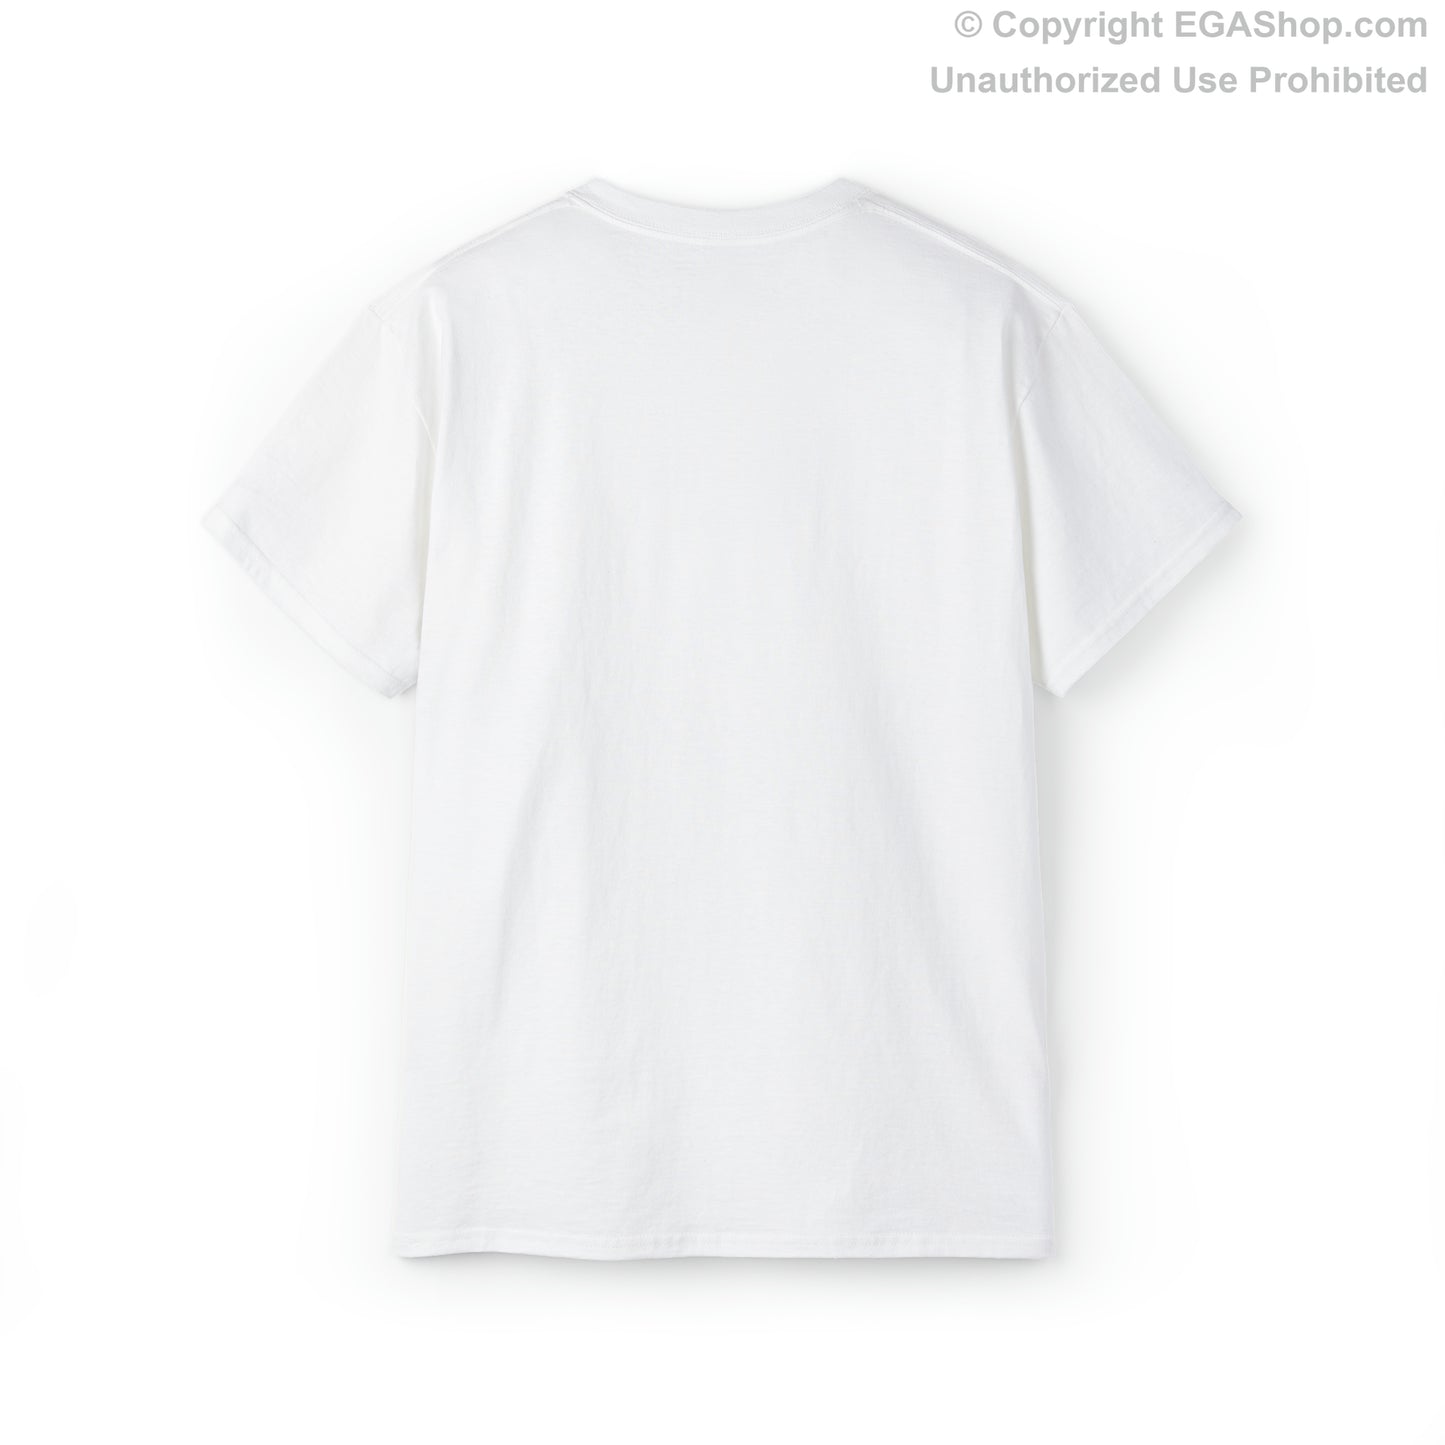 T-Shirt: Mike Co. MCRD San Diego (EGA, Blank Back)